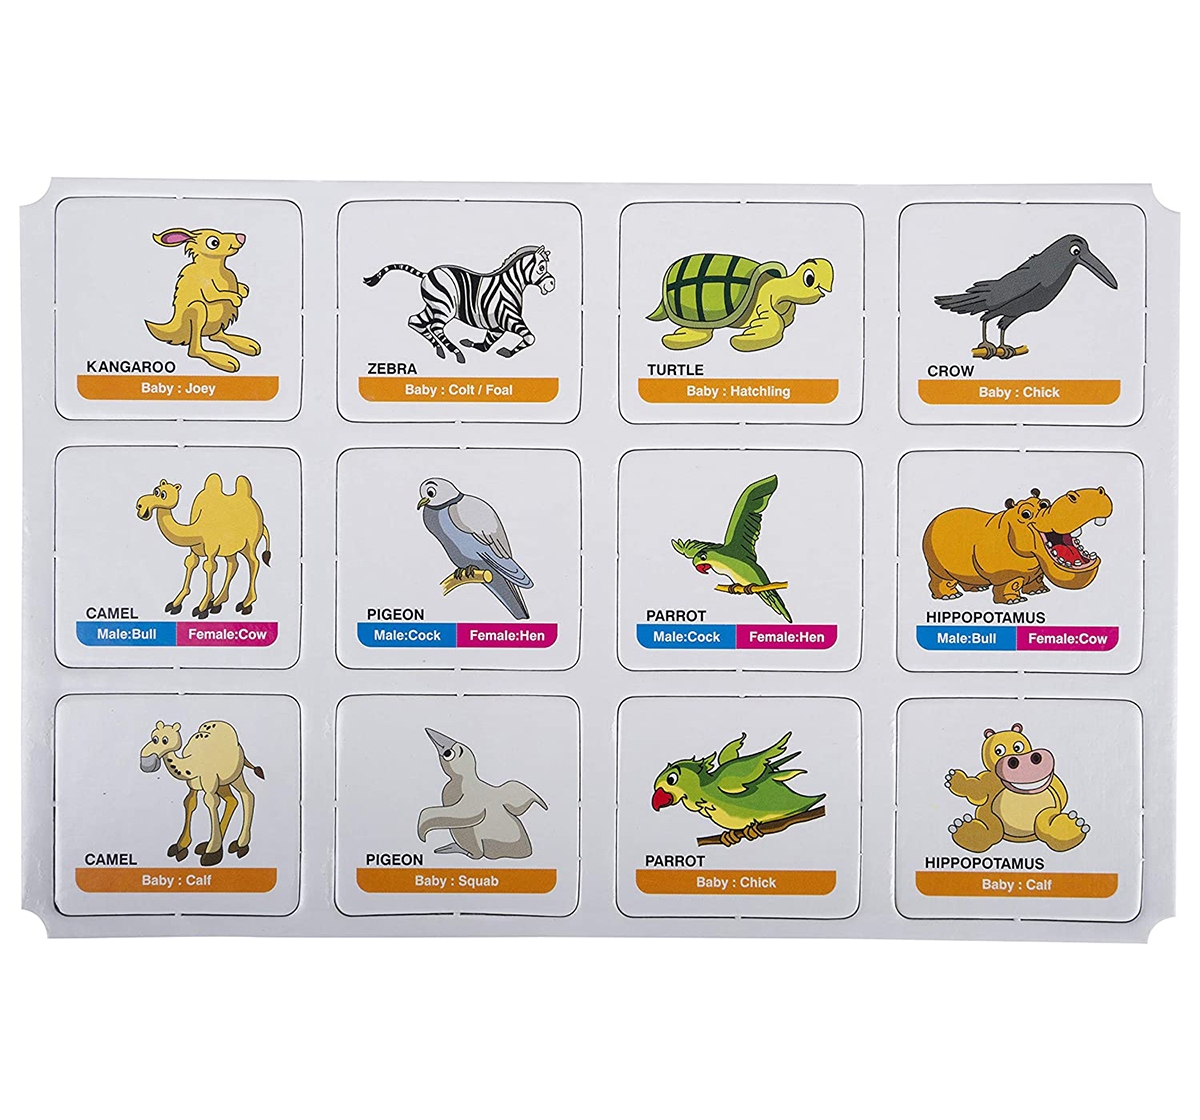 Funskool Memory Animal Family for Board Game Kids age 12M+